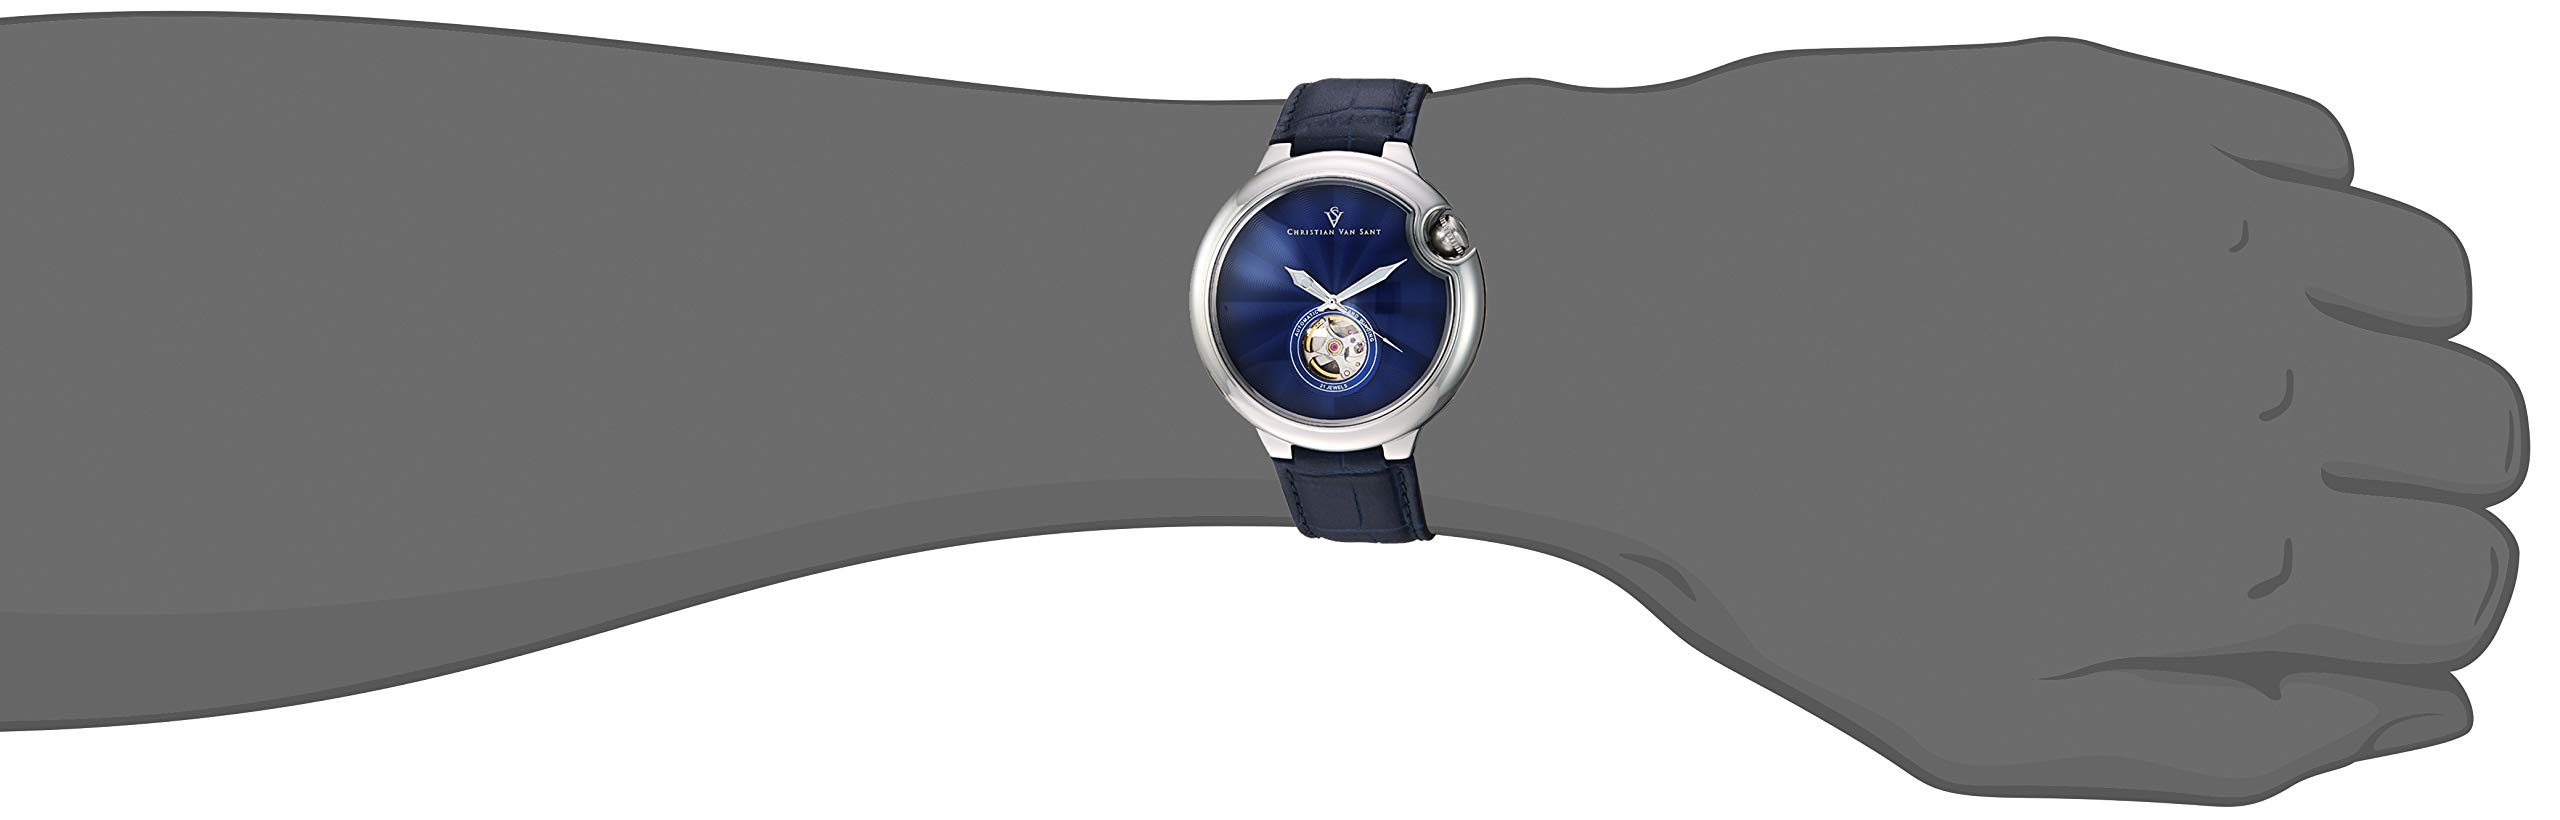 Christian Van Sant Men's CV0140 Cyclone Automatic Analog Display Quartz Blue Watch